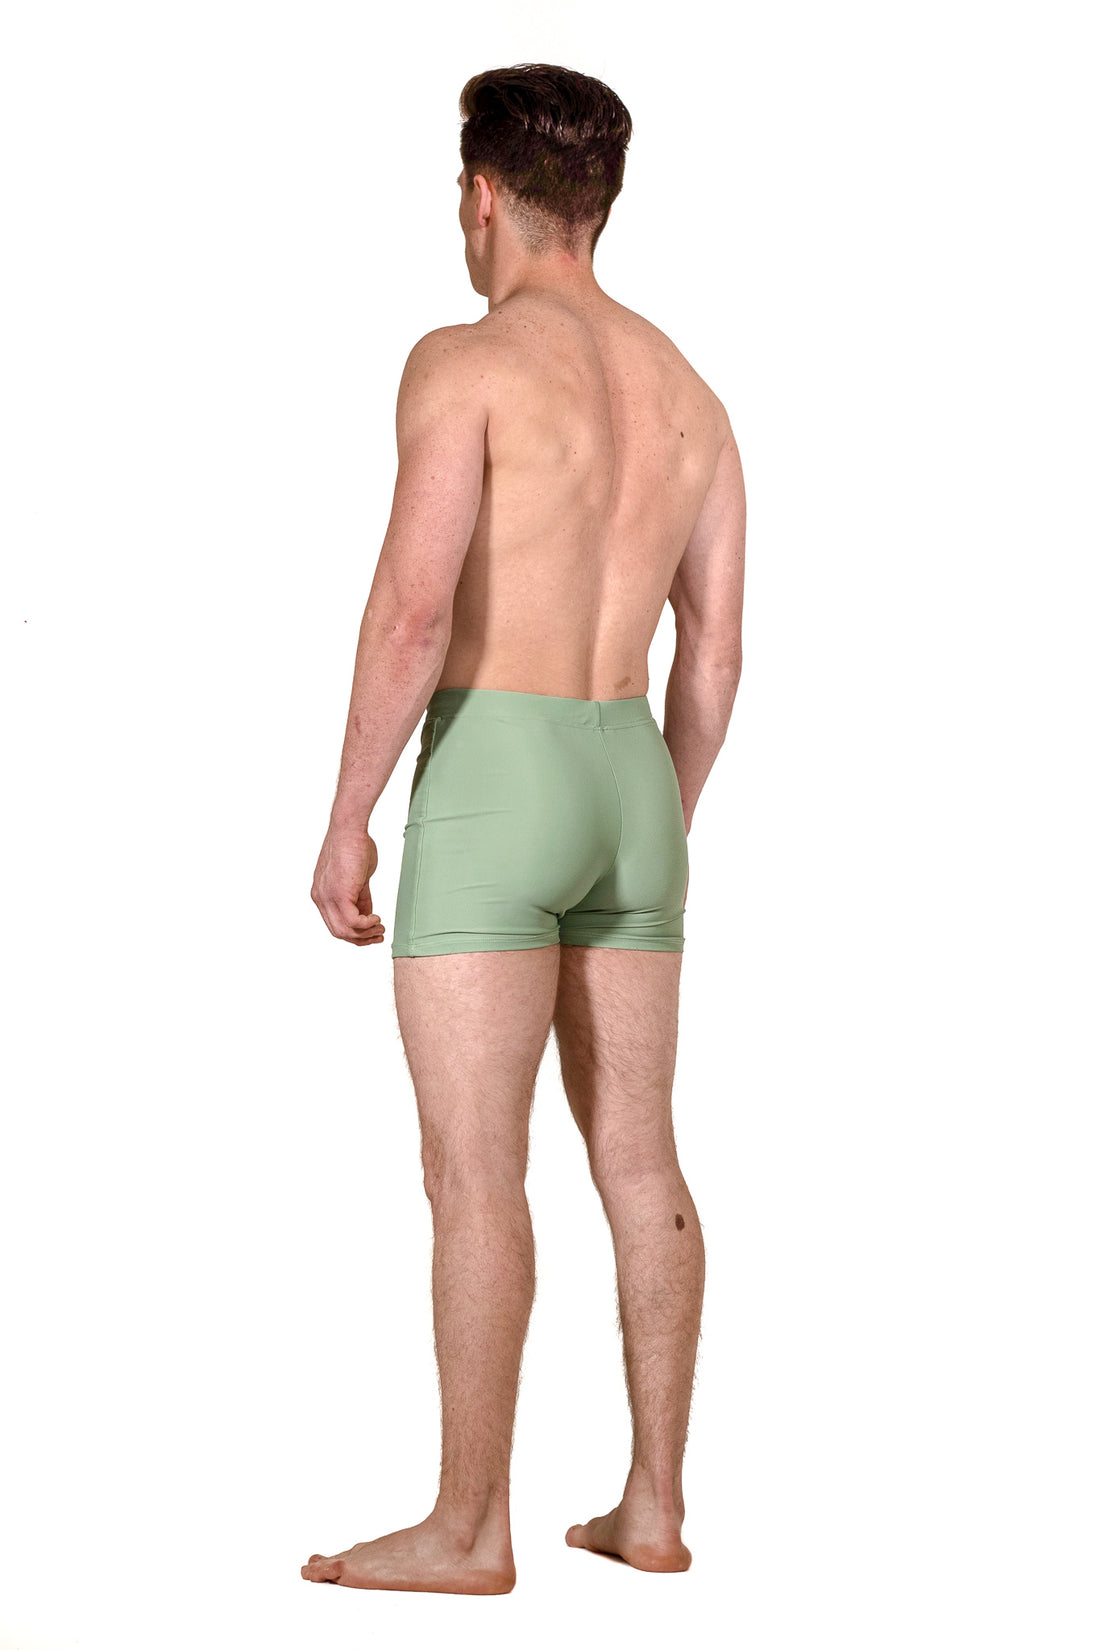 Green Spandex Swim Short - KAV Wear 